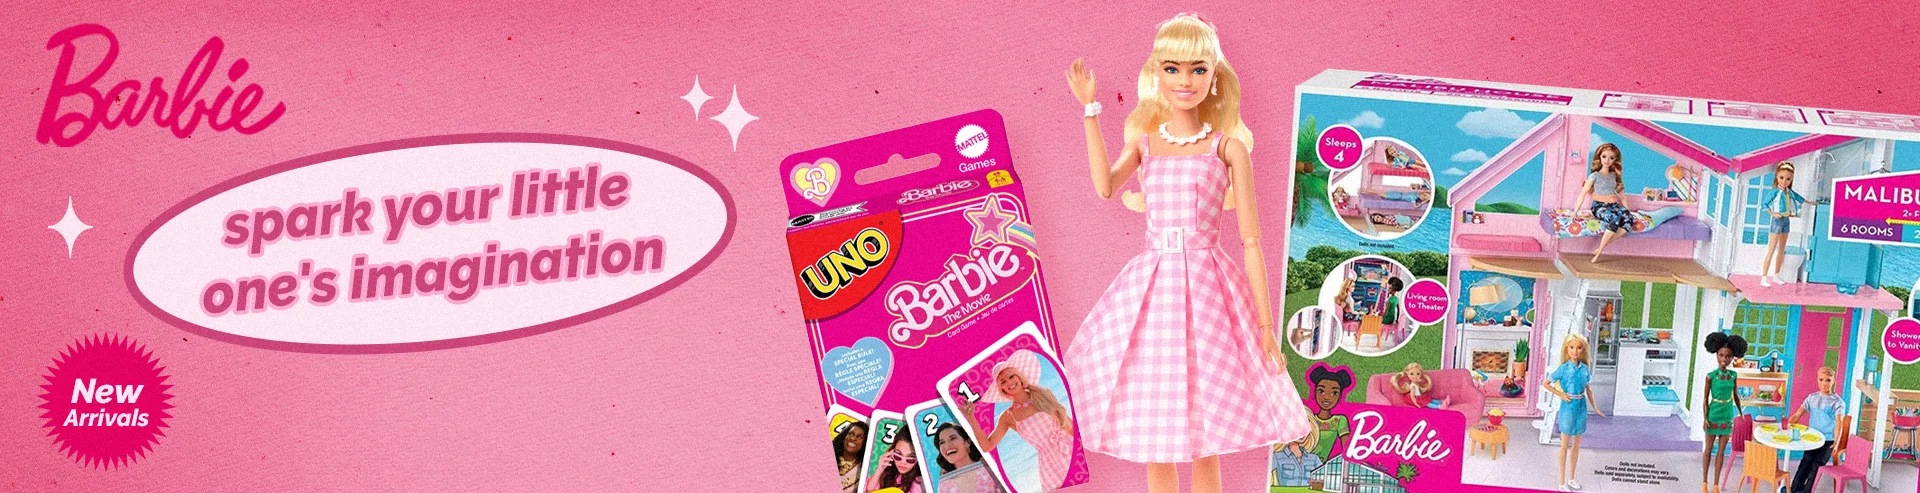 VM-Hero-Barbie-Merchandise-1920x493.webp